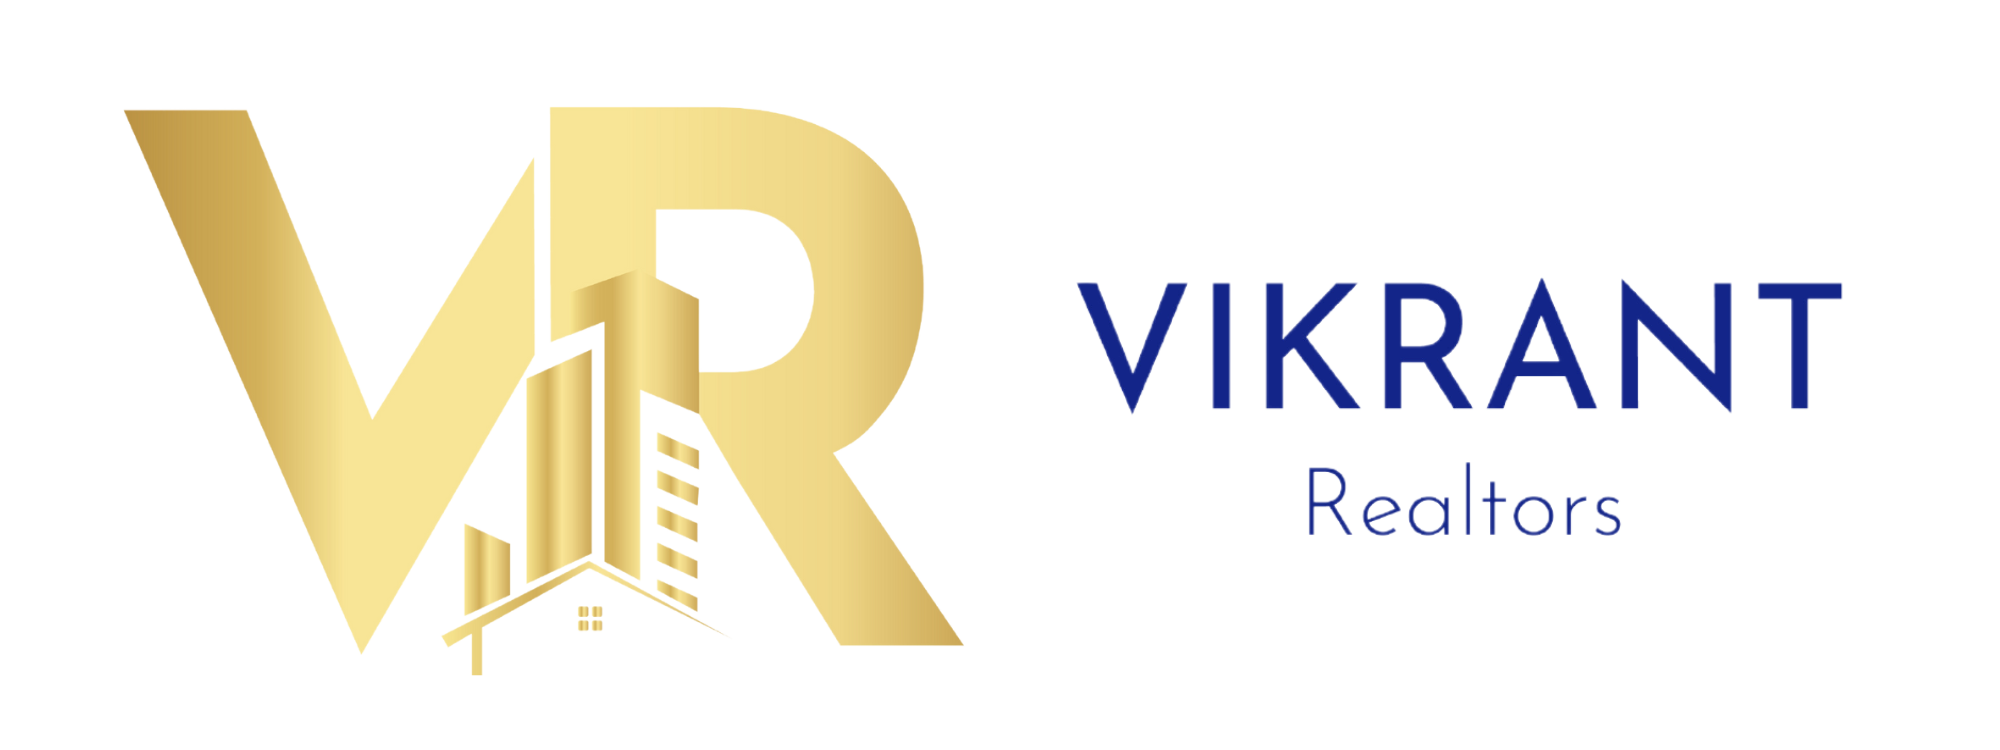 Vikrant Realtors